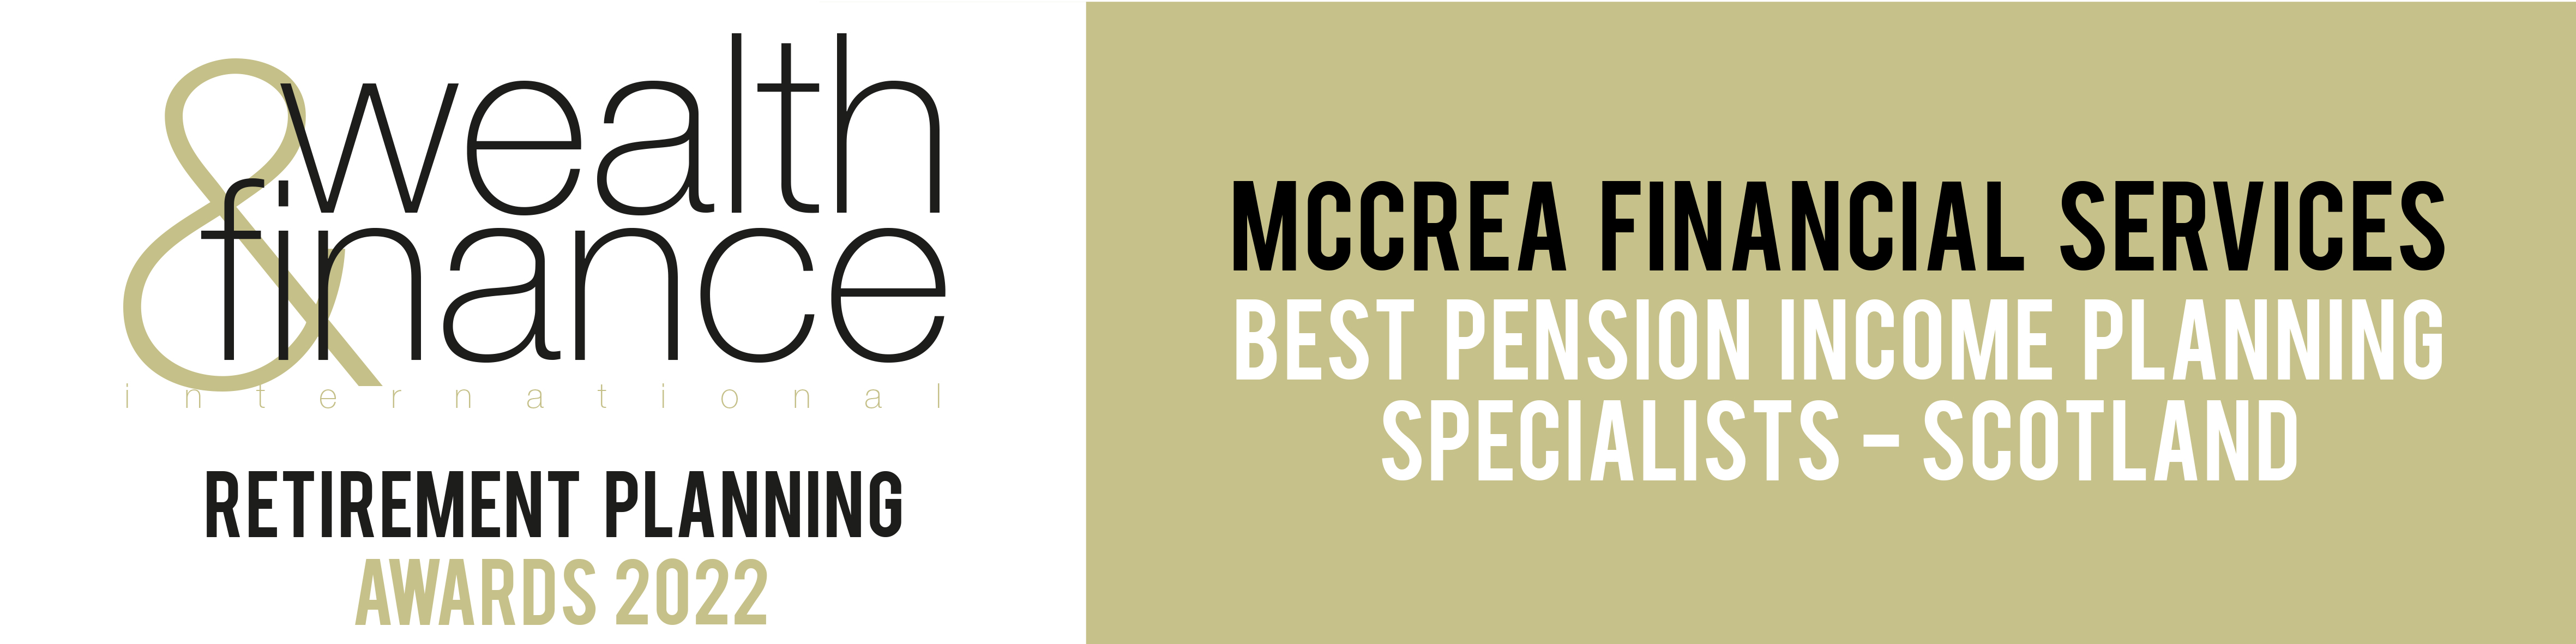 Mar22419 - McCrea Financial Services - 2022 Retirement Planning Awards Winners Logo.jpg